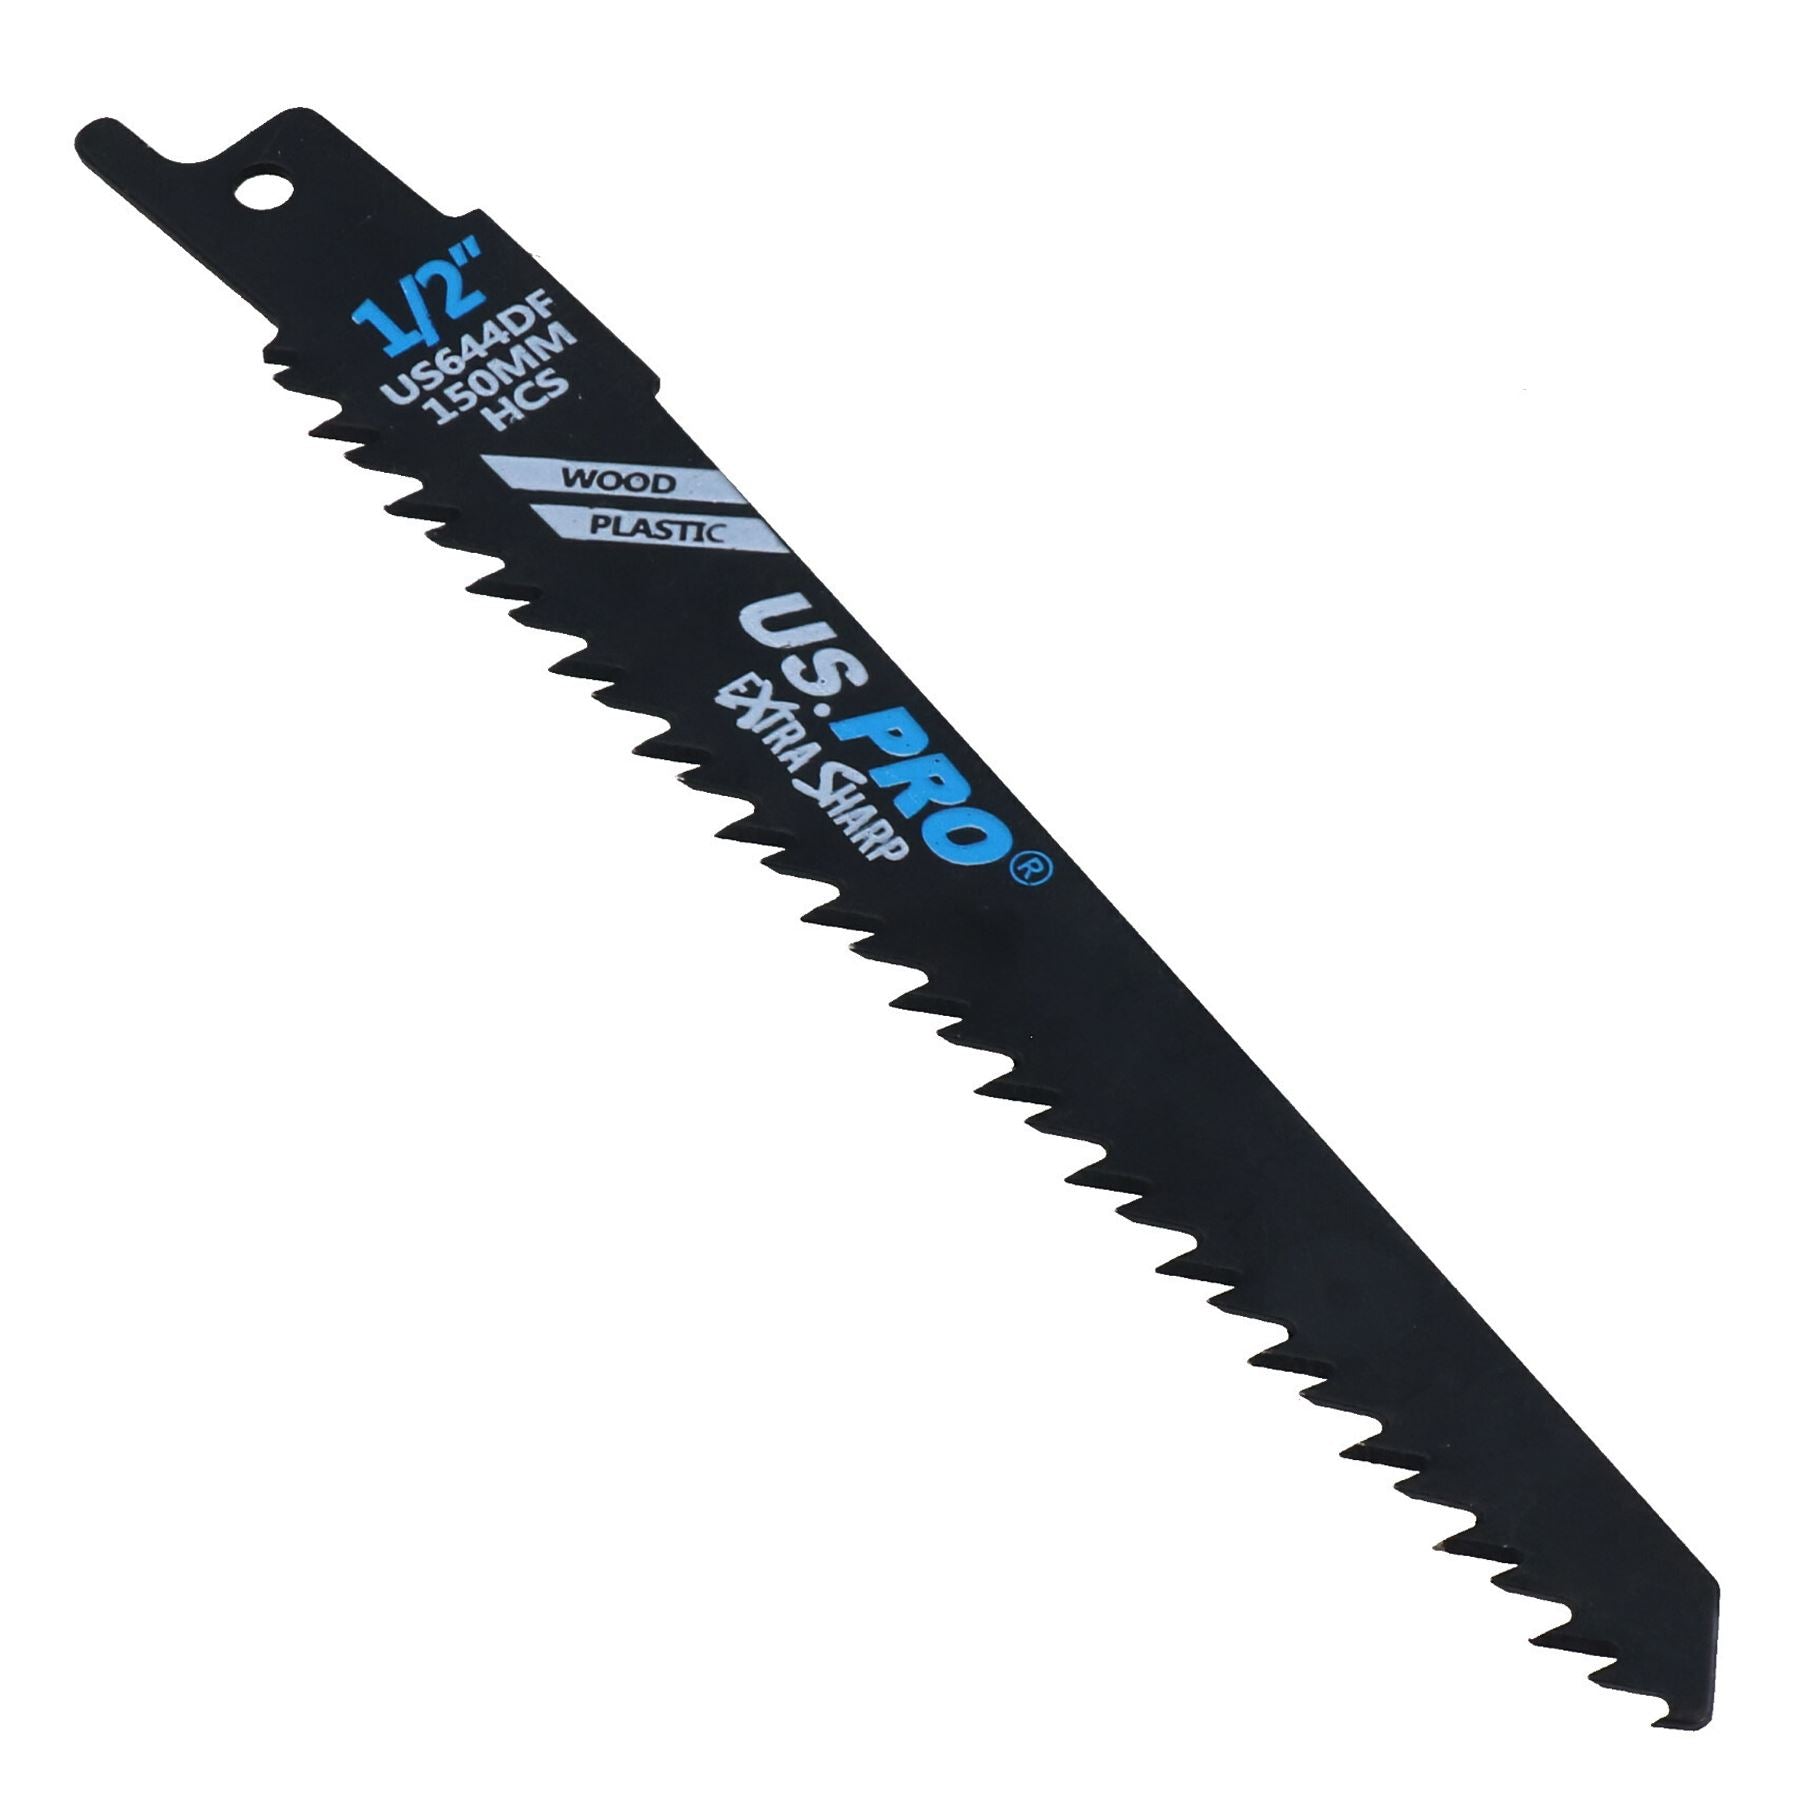 150mm Reciprocating Saw Blade 5 TPI Cutting Wood Plastic Sharp Fast Cut